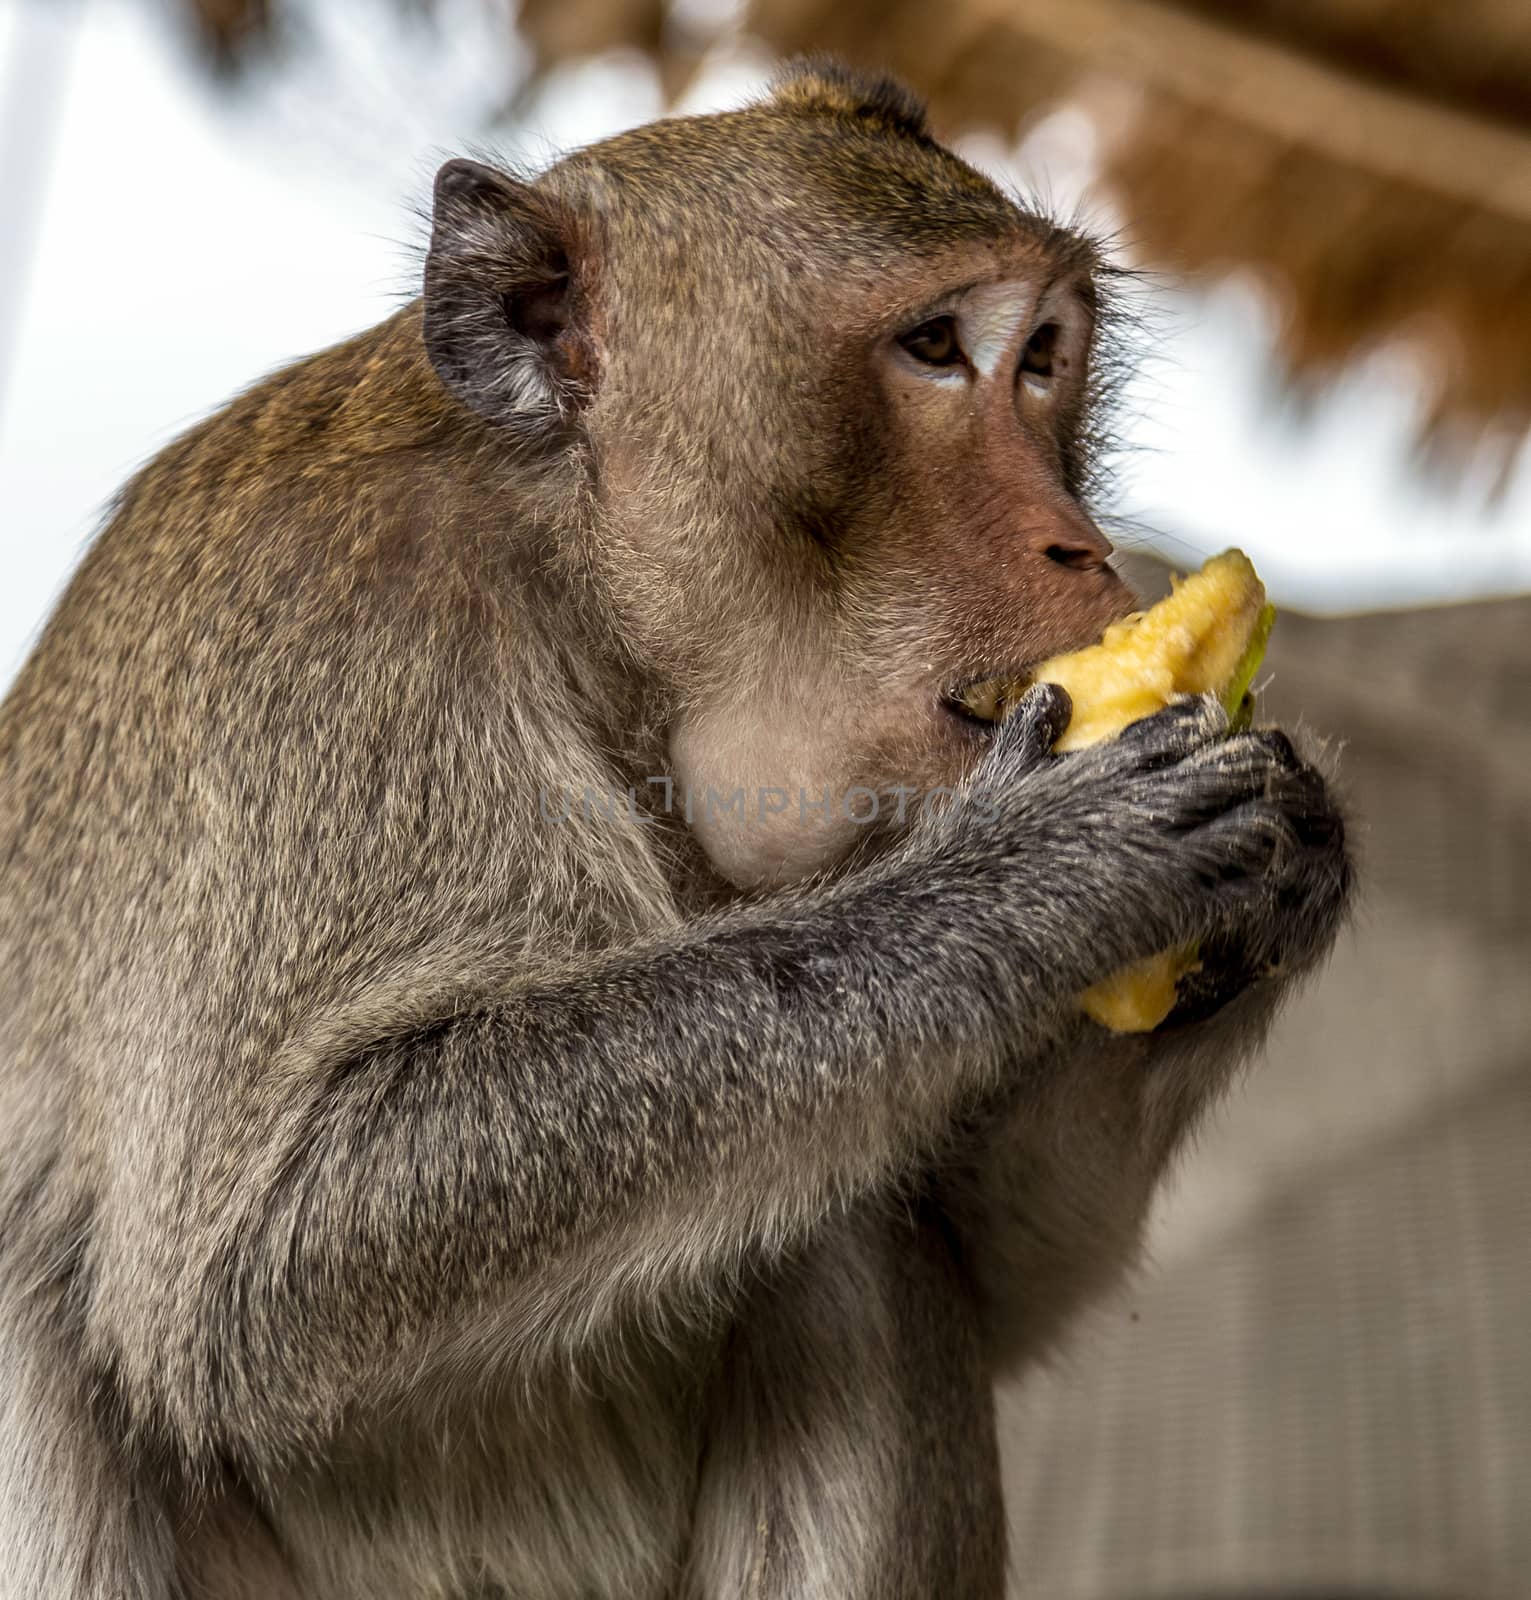 Portrait Rhesus Macaques monkey. Macaca Mulatta Primates monkey eats banana, blur background